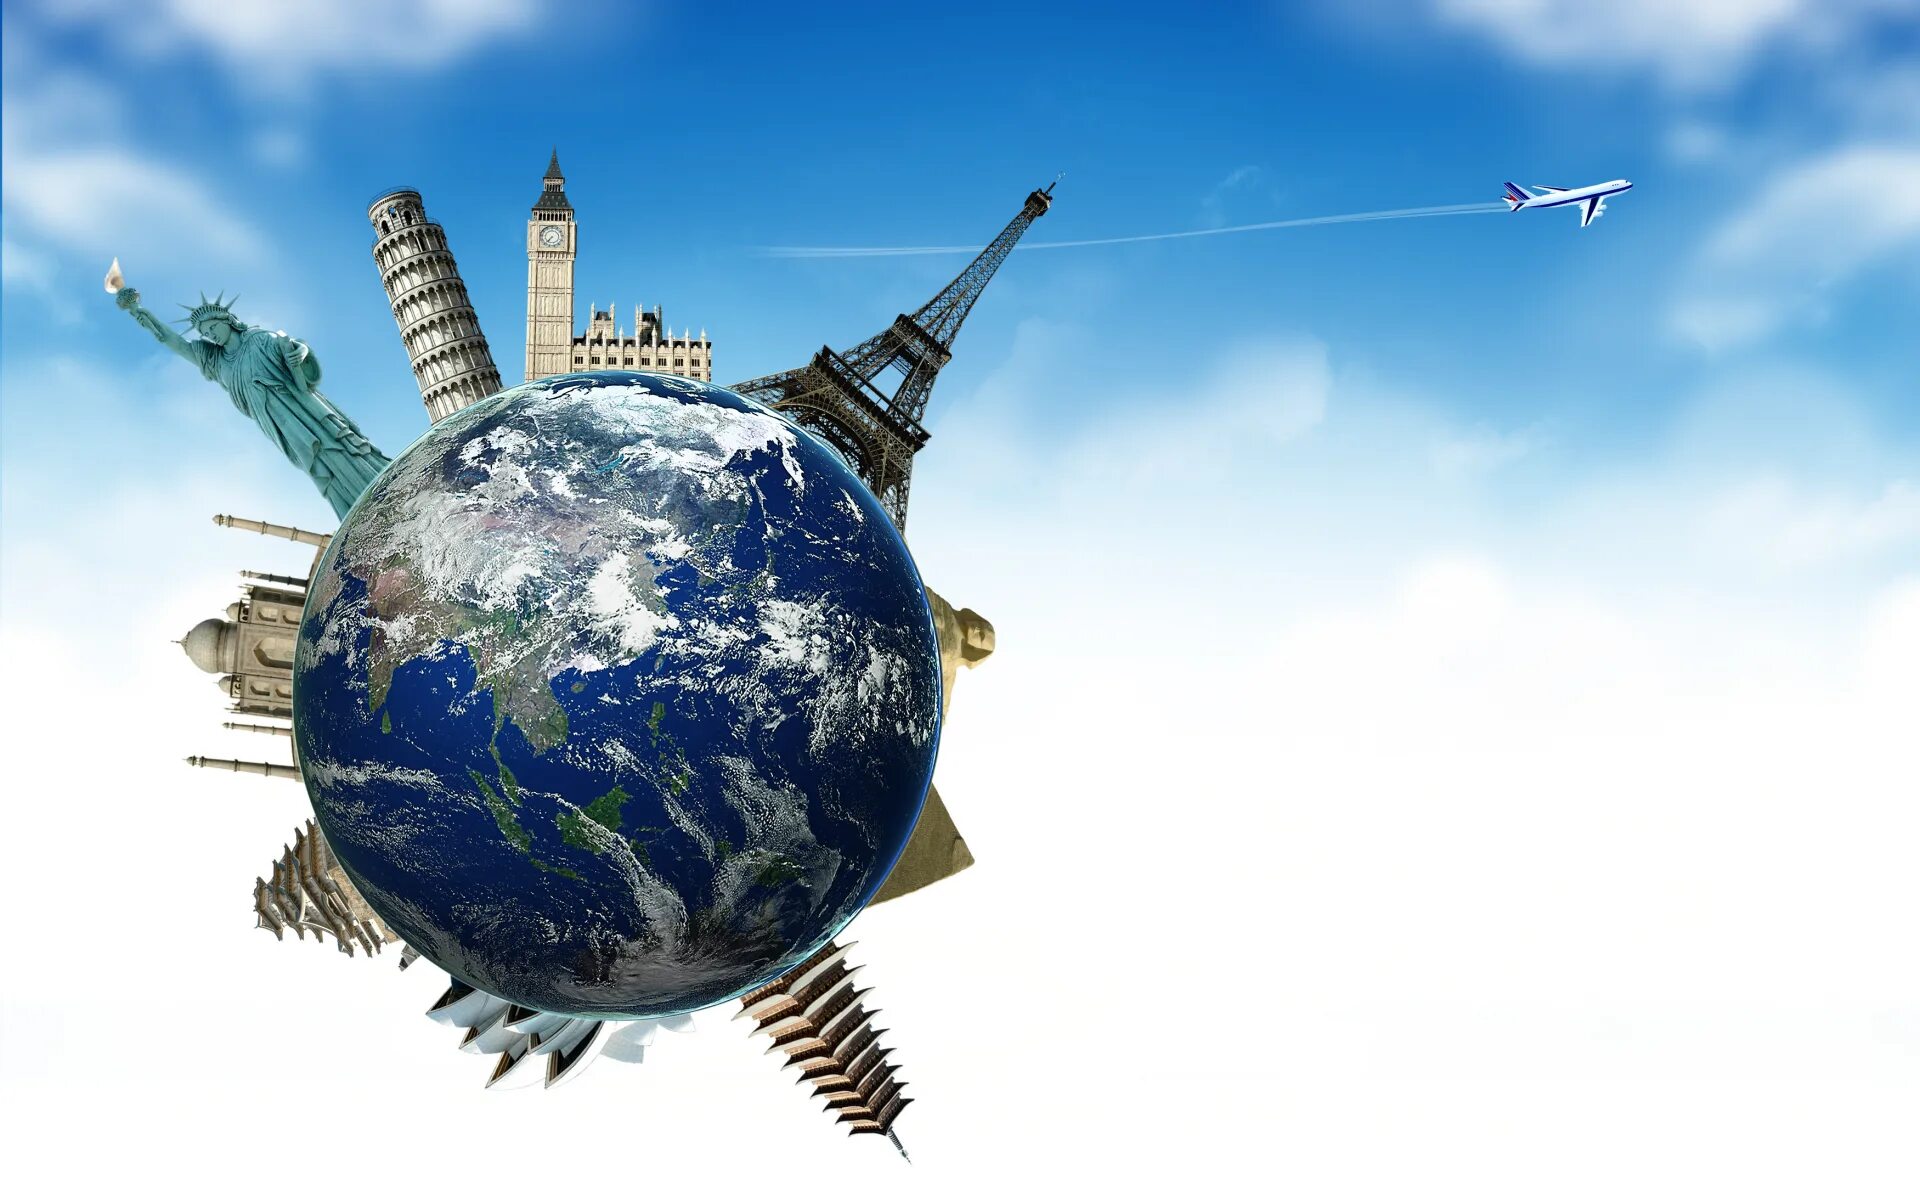 Traveling over the world. Земной шар. Путешествия по миру. Земной шар путешествия. Мировой туризм.